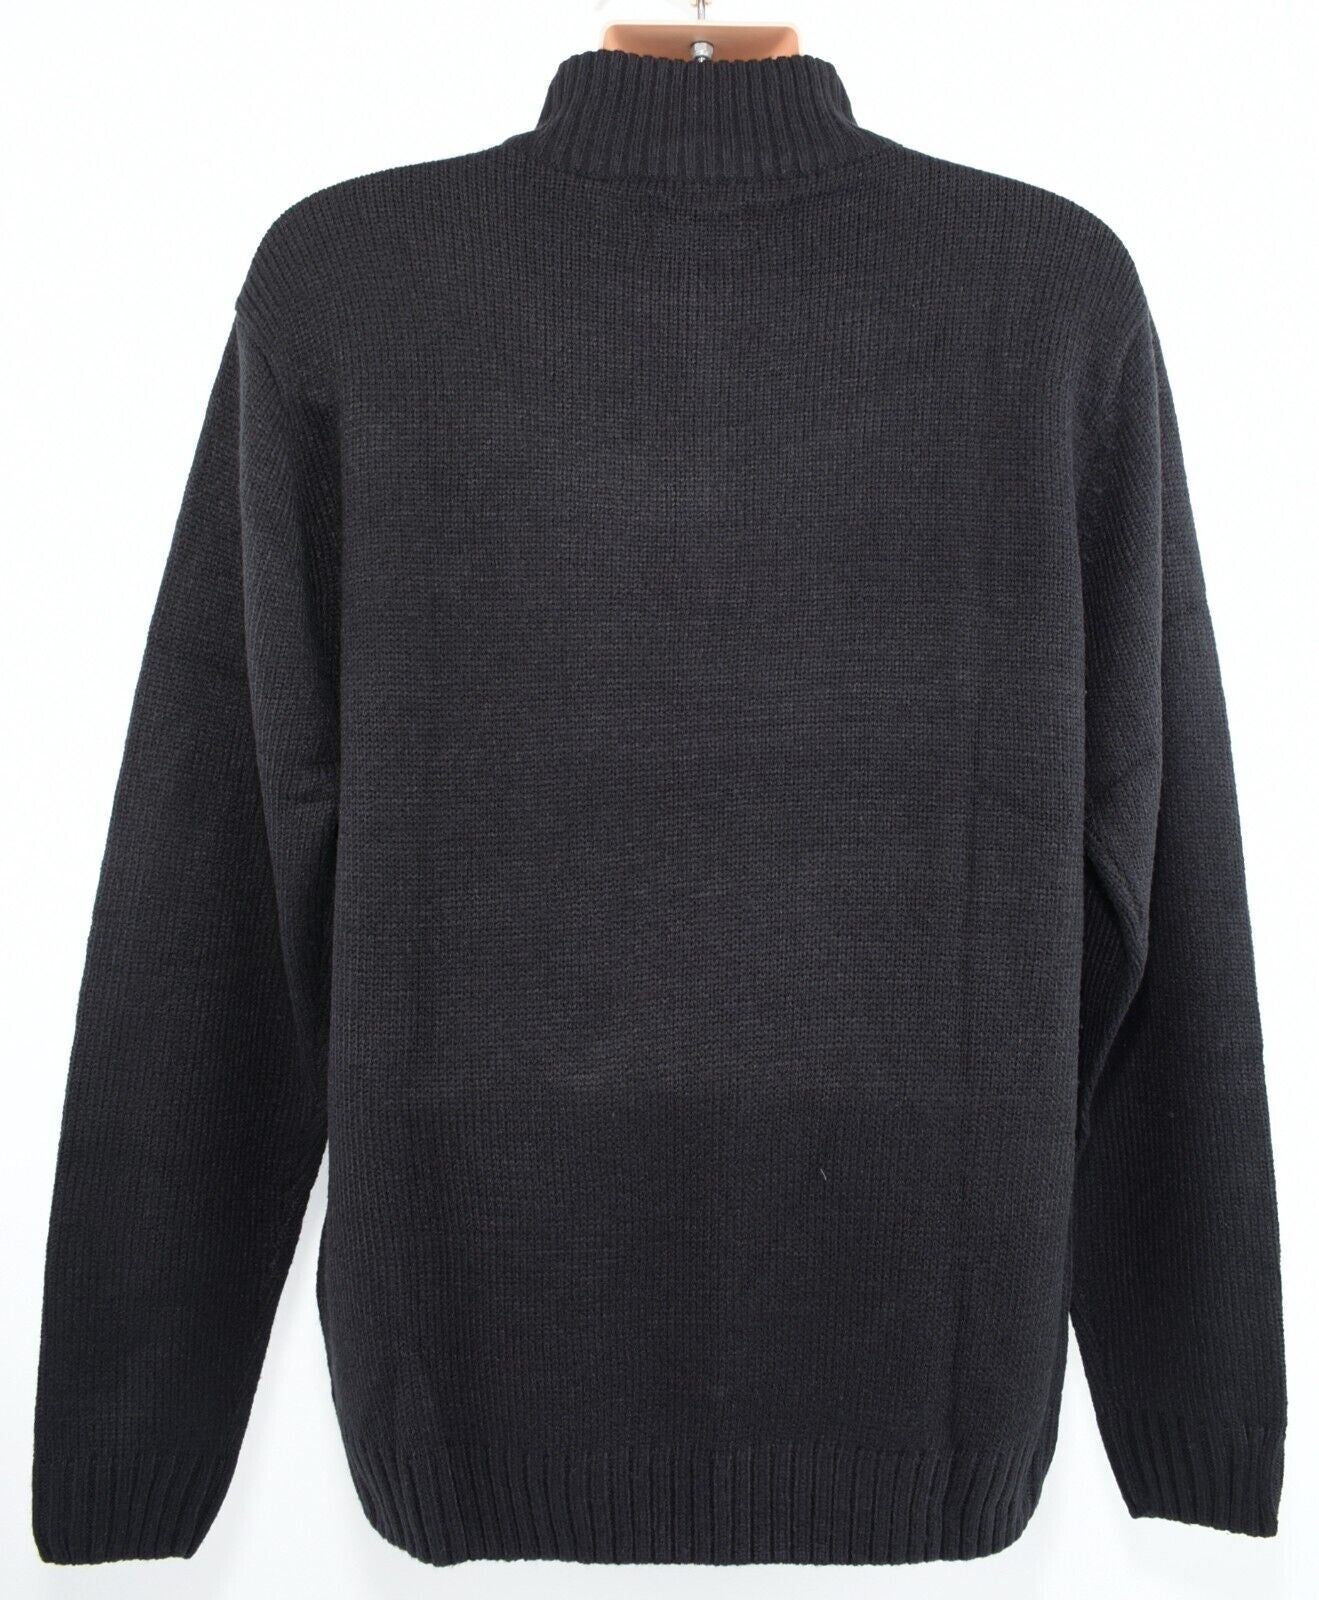 PIERRE CARDIN Men's 1/4 Zip Neck Knit Jumper / Pullover, Black, size XL